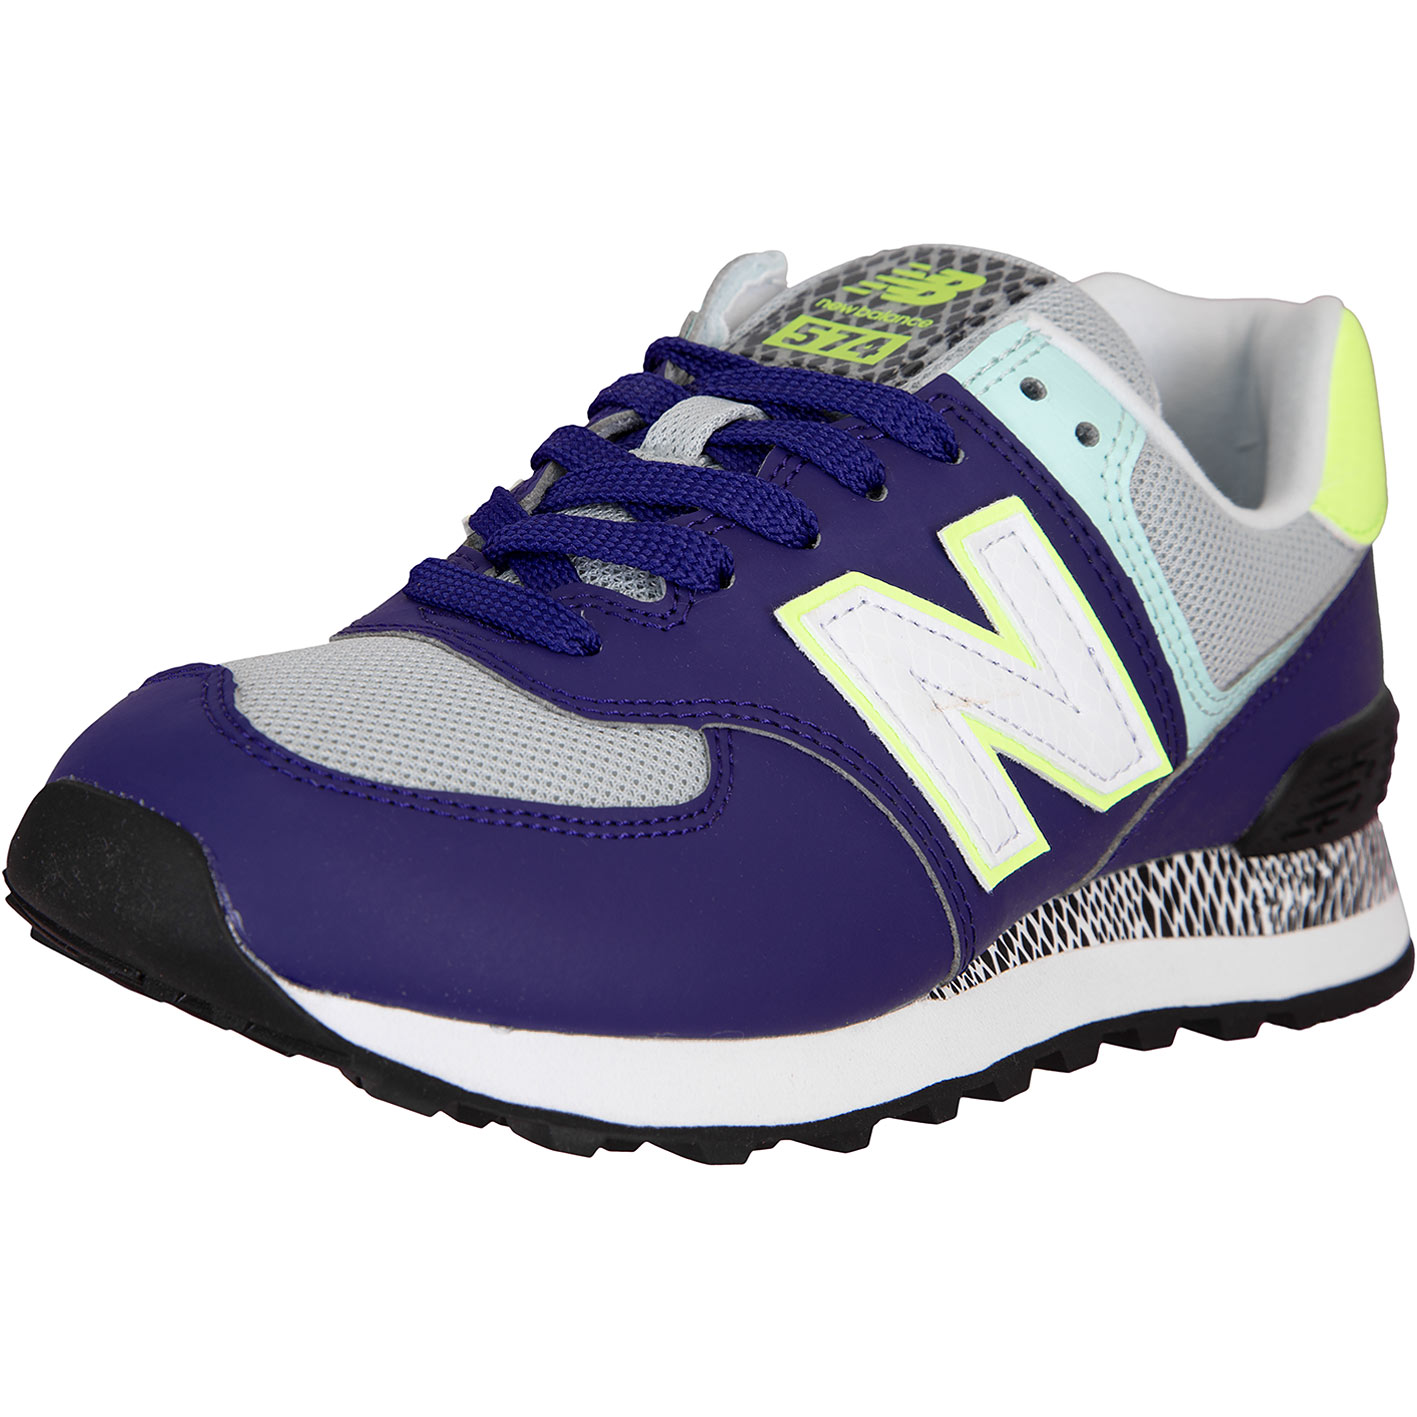 wetgeving verraad hamer ☆ New Balance NB 574 Damen Sneaker Schuhe lila - hier bestellen!